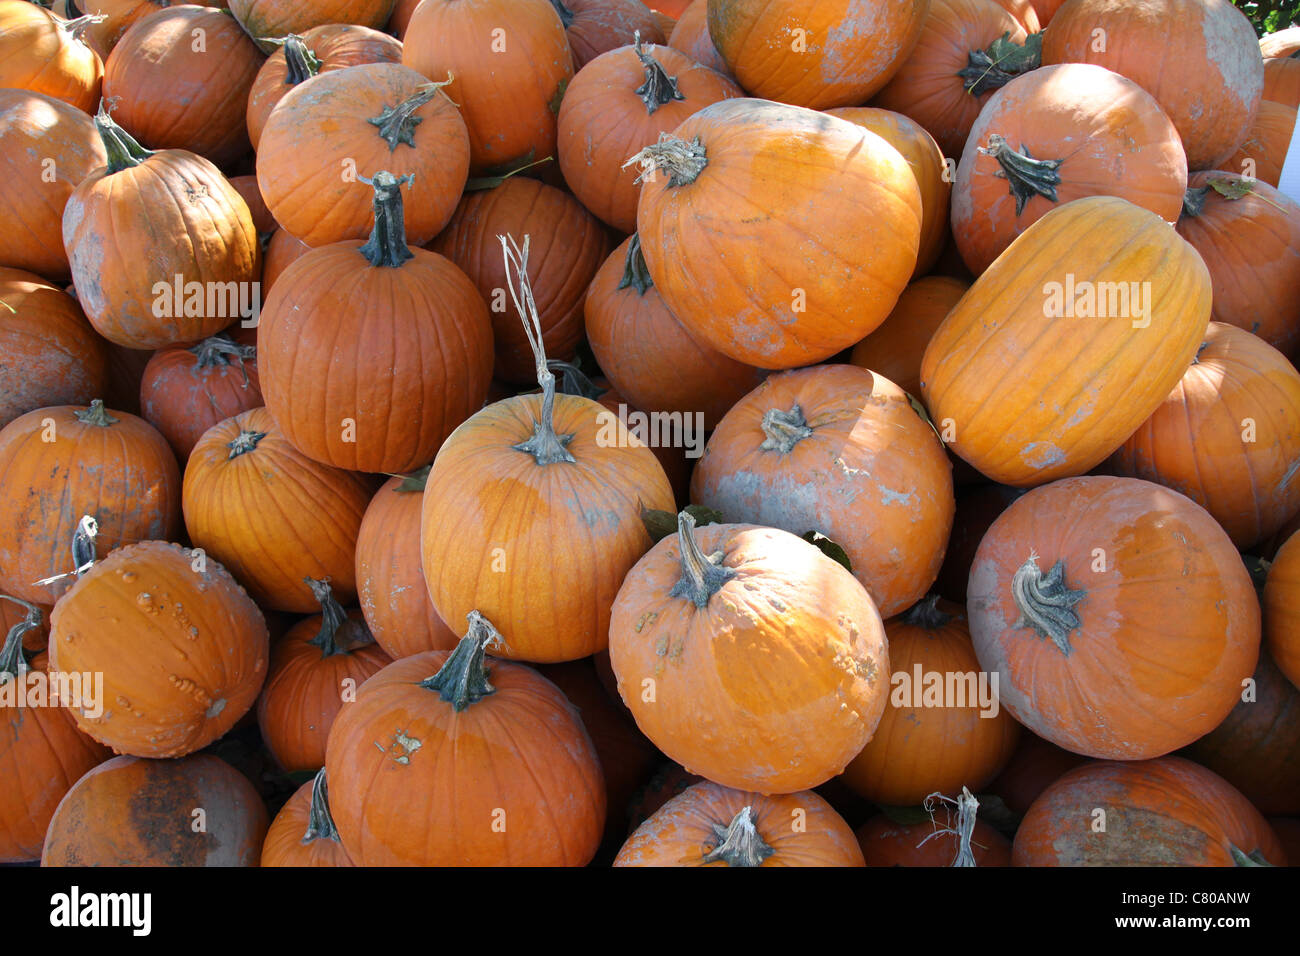 Wallpaper of pumpkins, different shades of orange Stock Photo